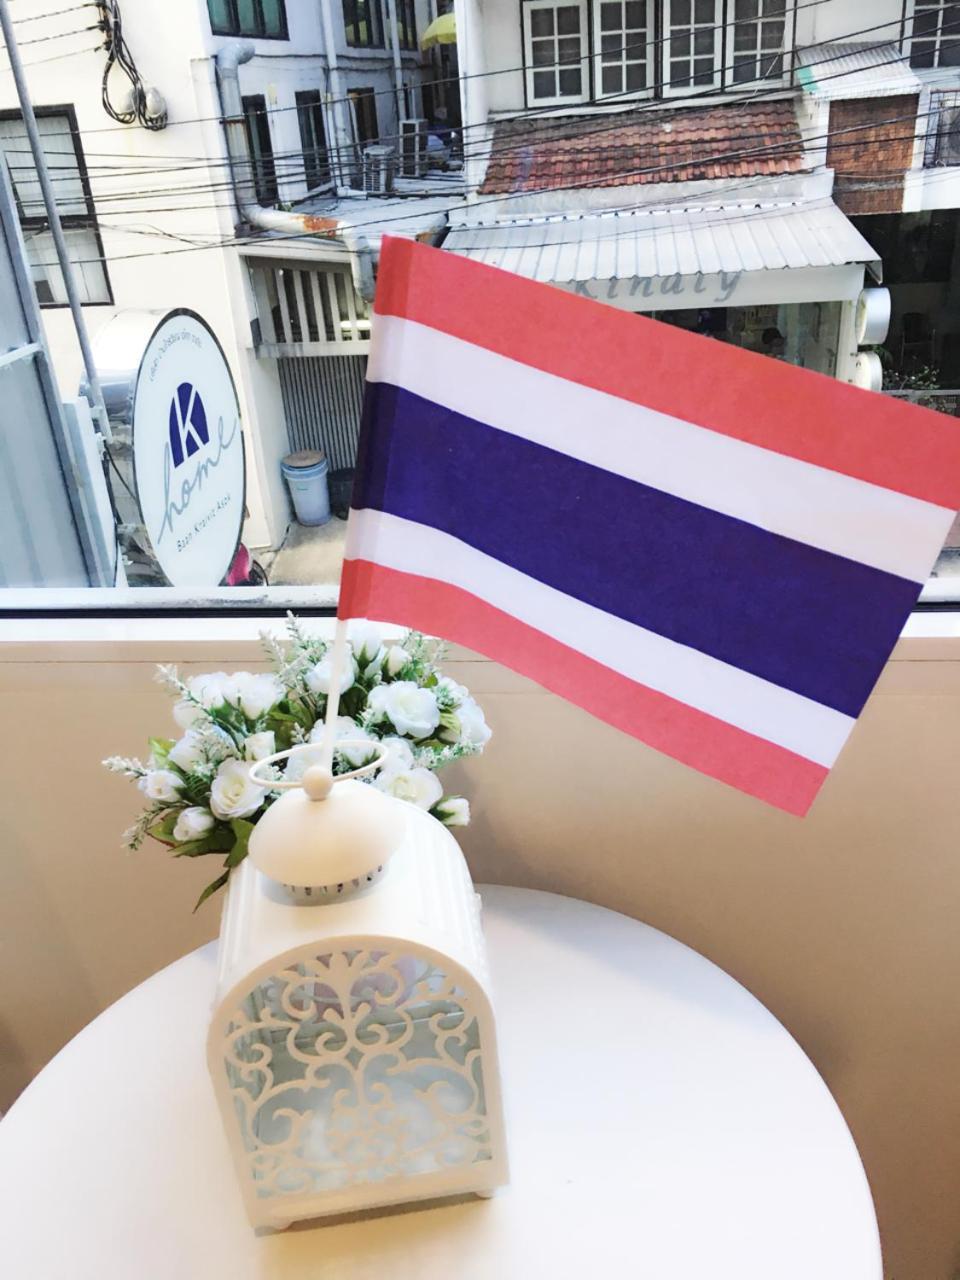 K Home Asok Bangkok Extérieur photo